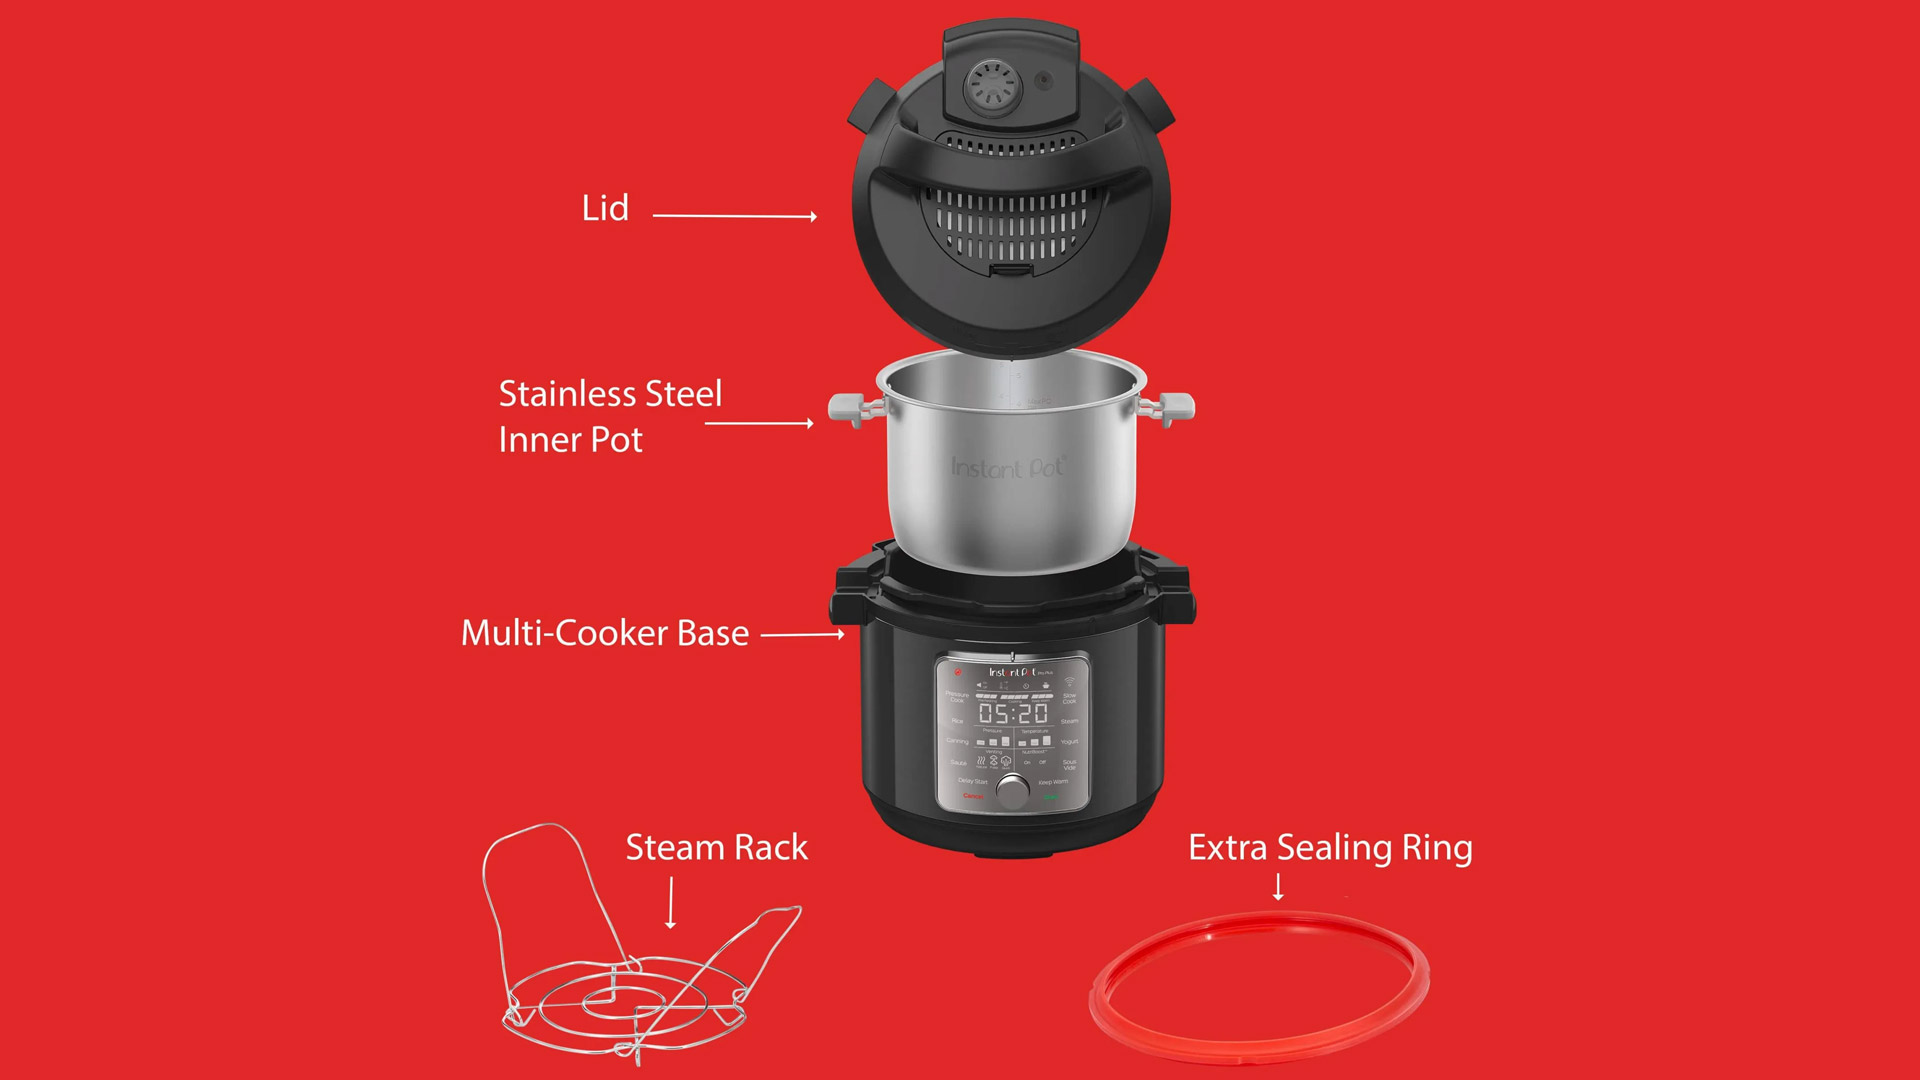 The various parts of the Instant Pot Pro Plus Smart Multi-Cooker